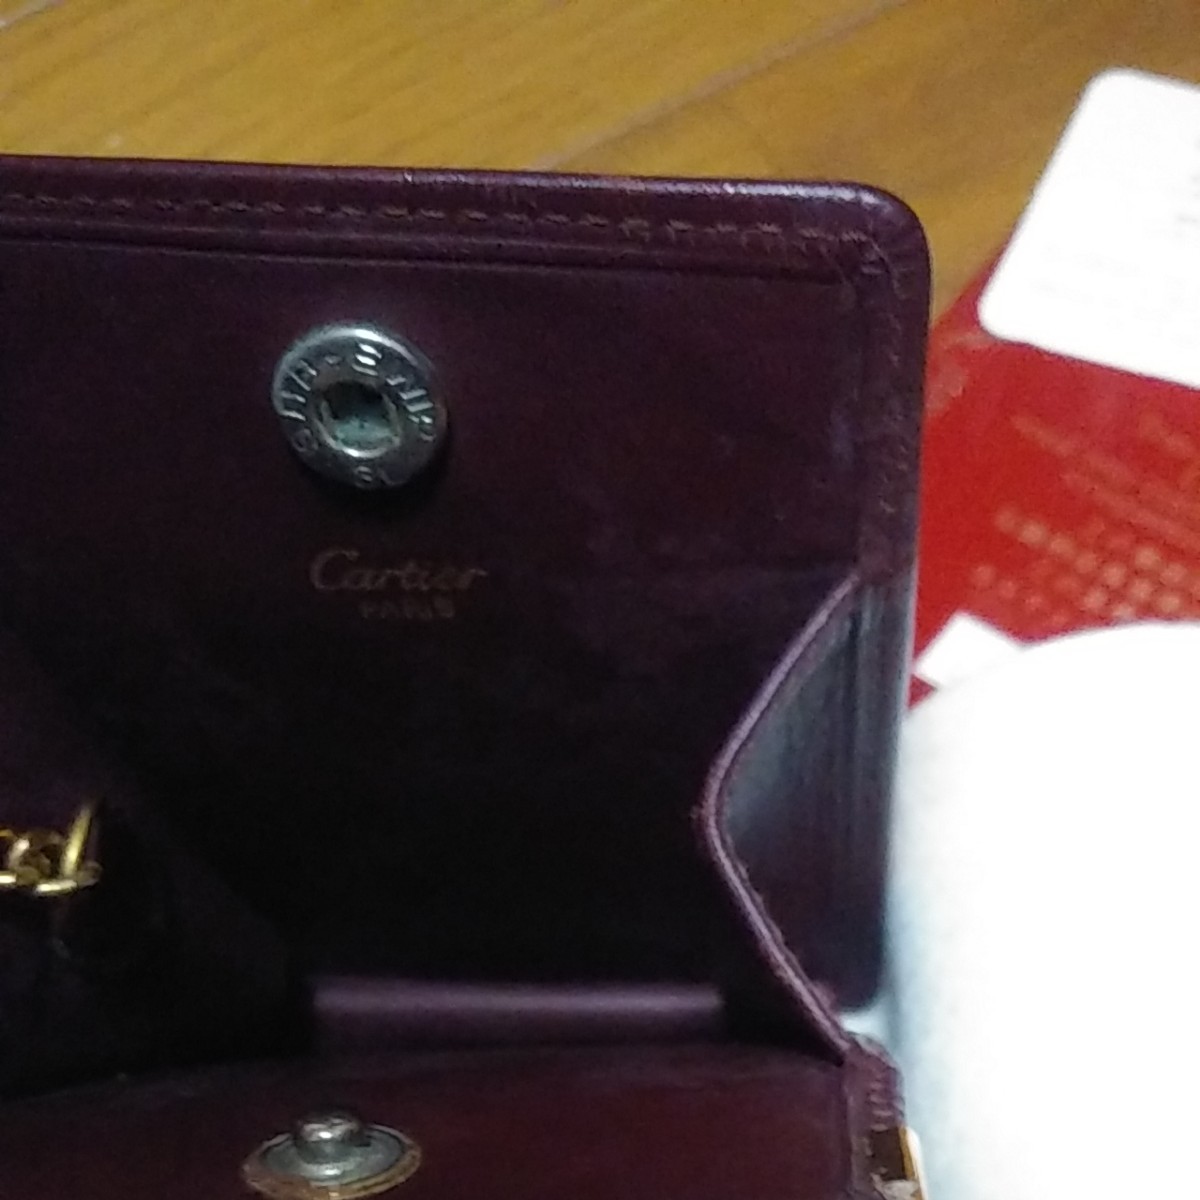 Cartierシガレットケース